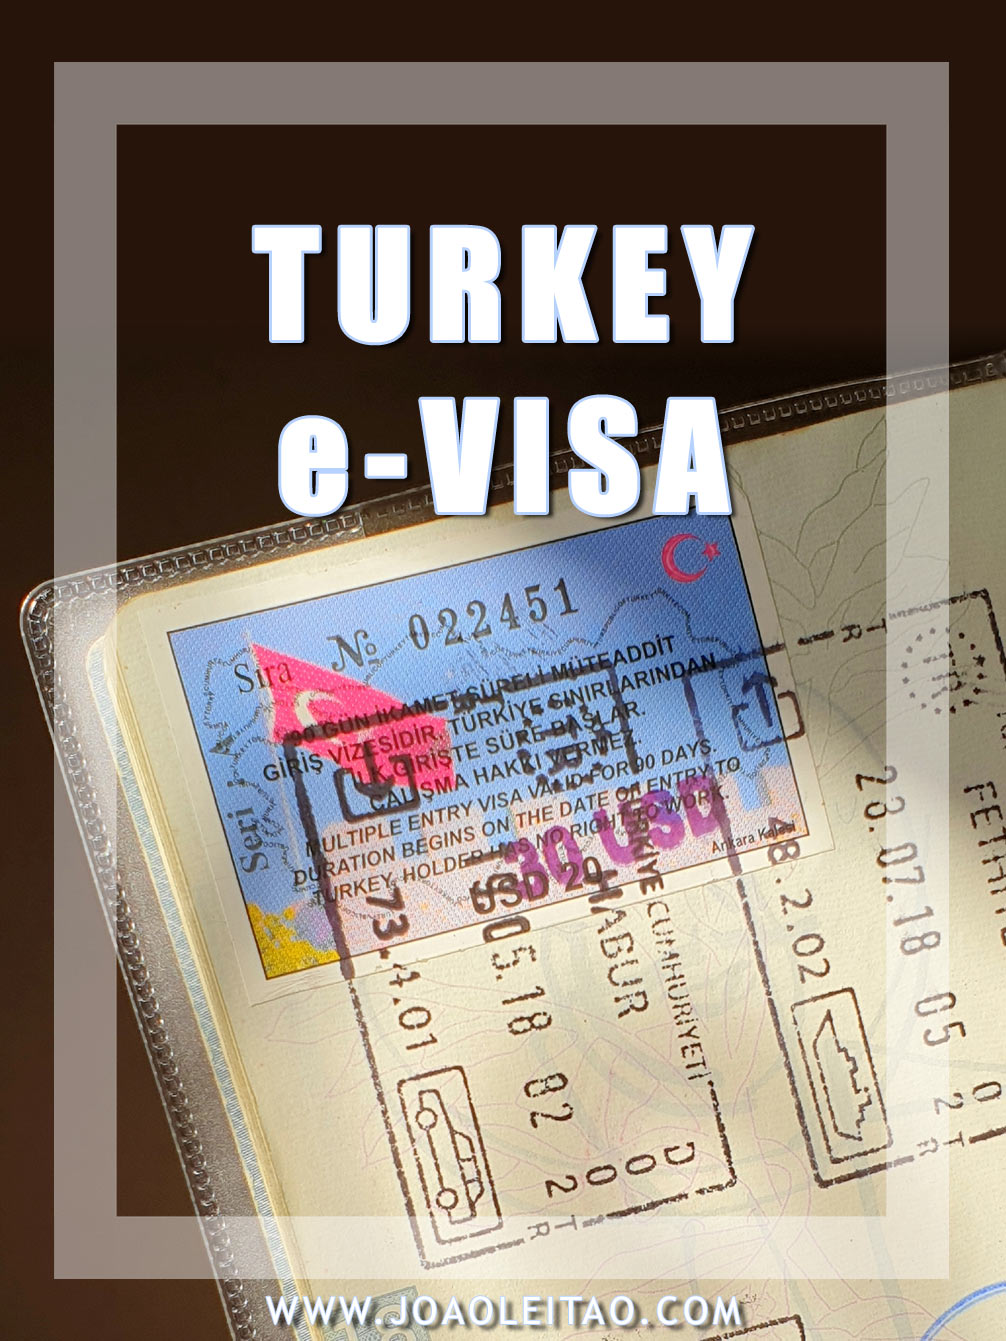 tourist visa to turkey